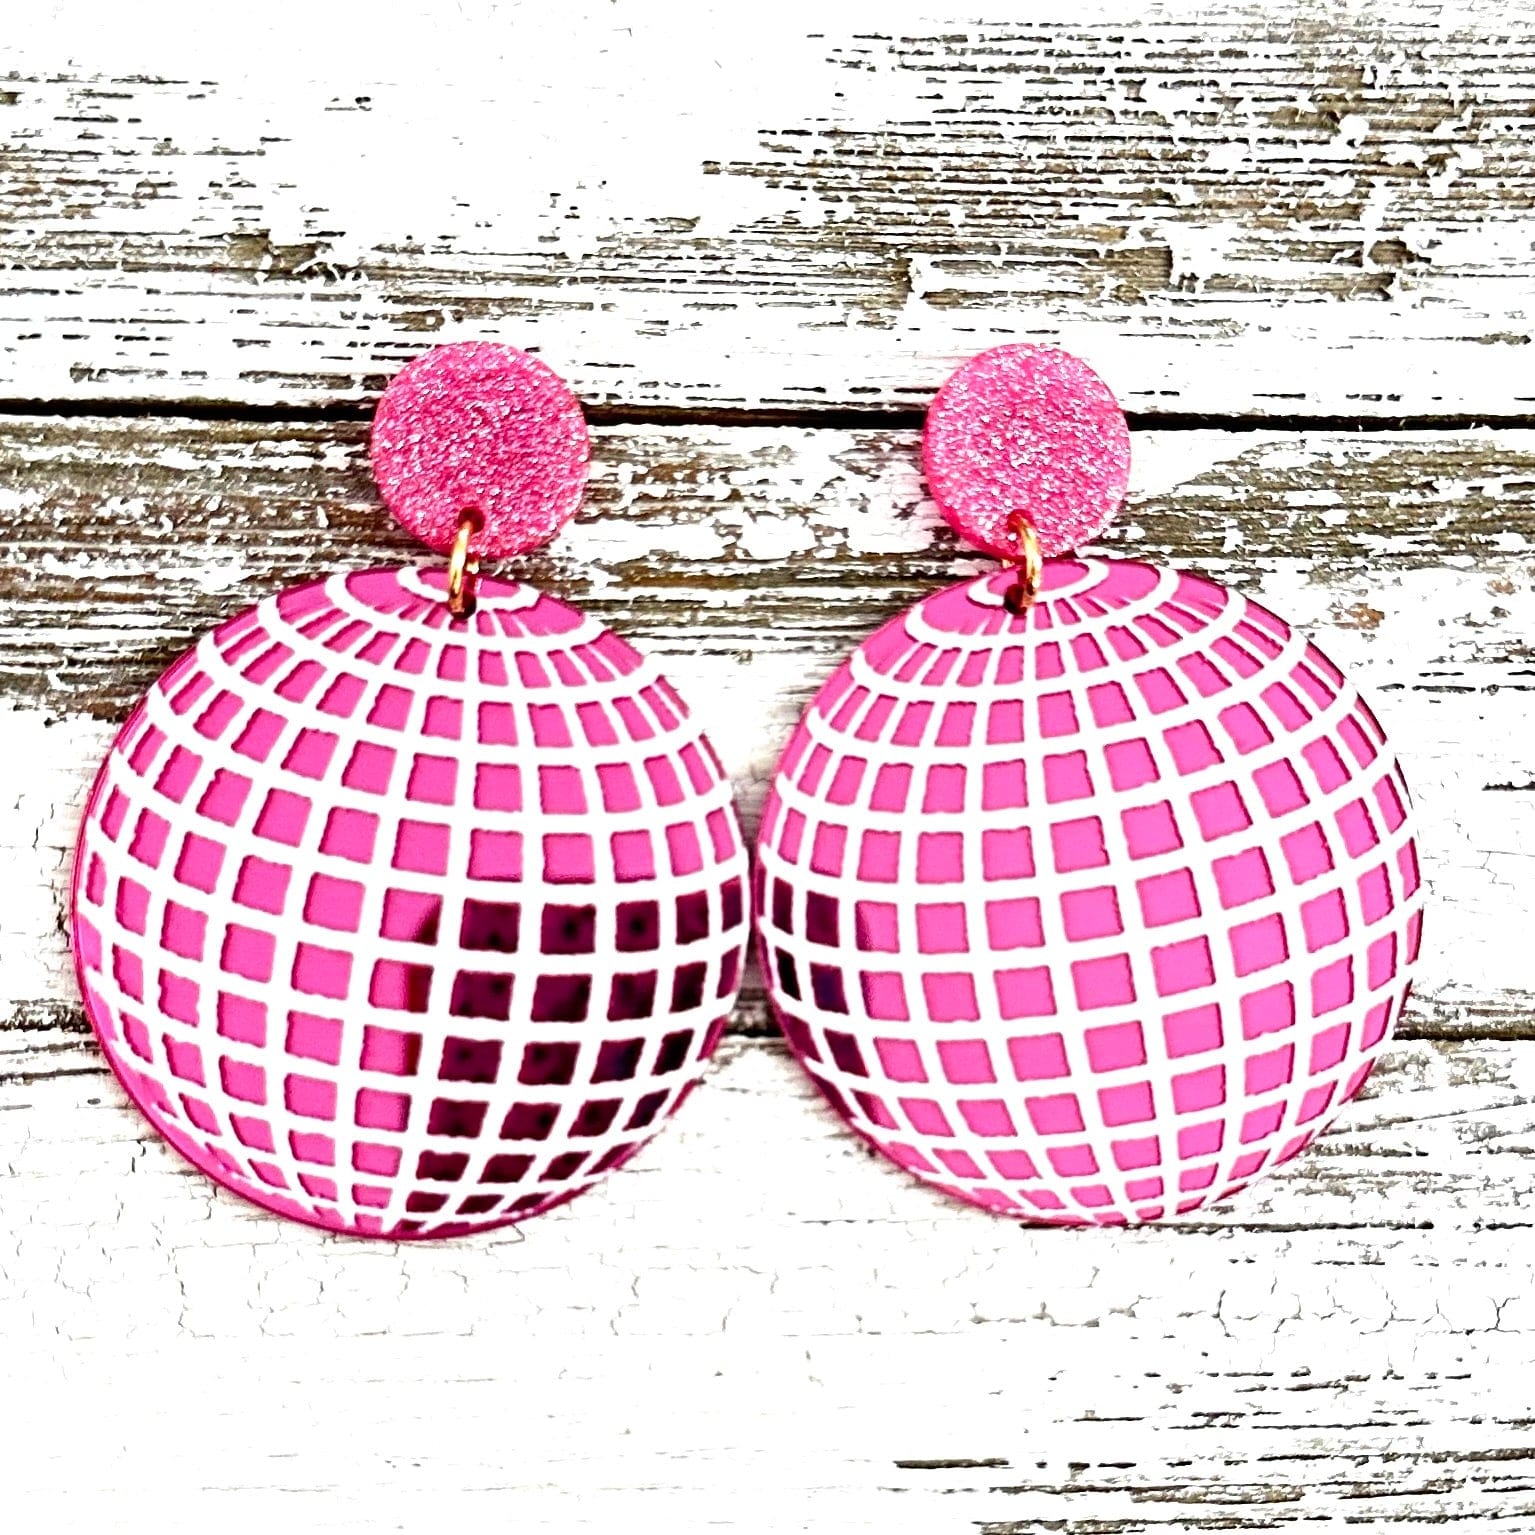 Hot Pink Disco Ball Earrings